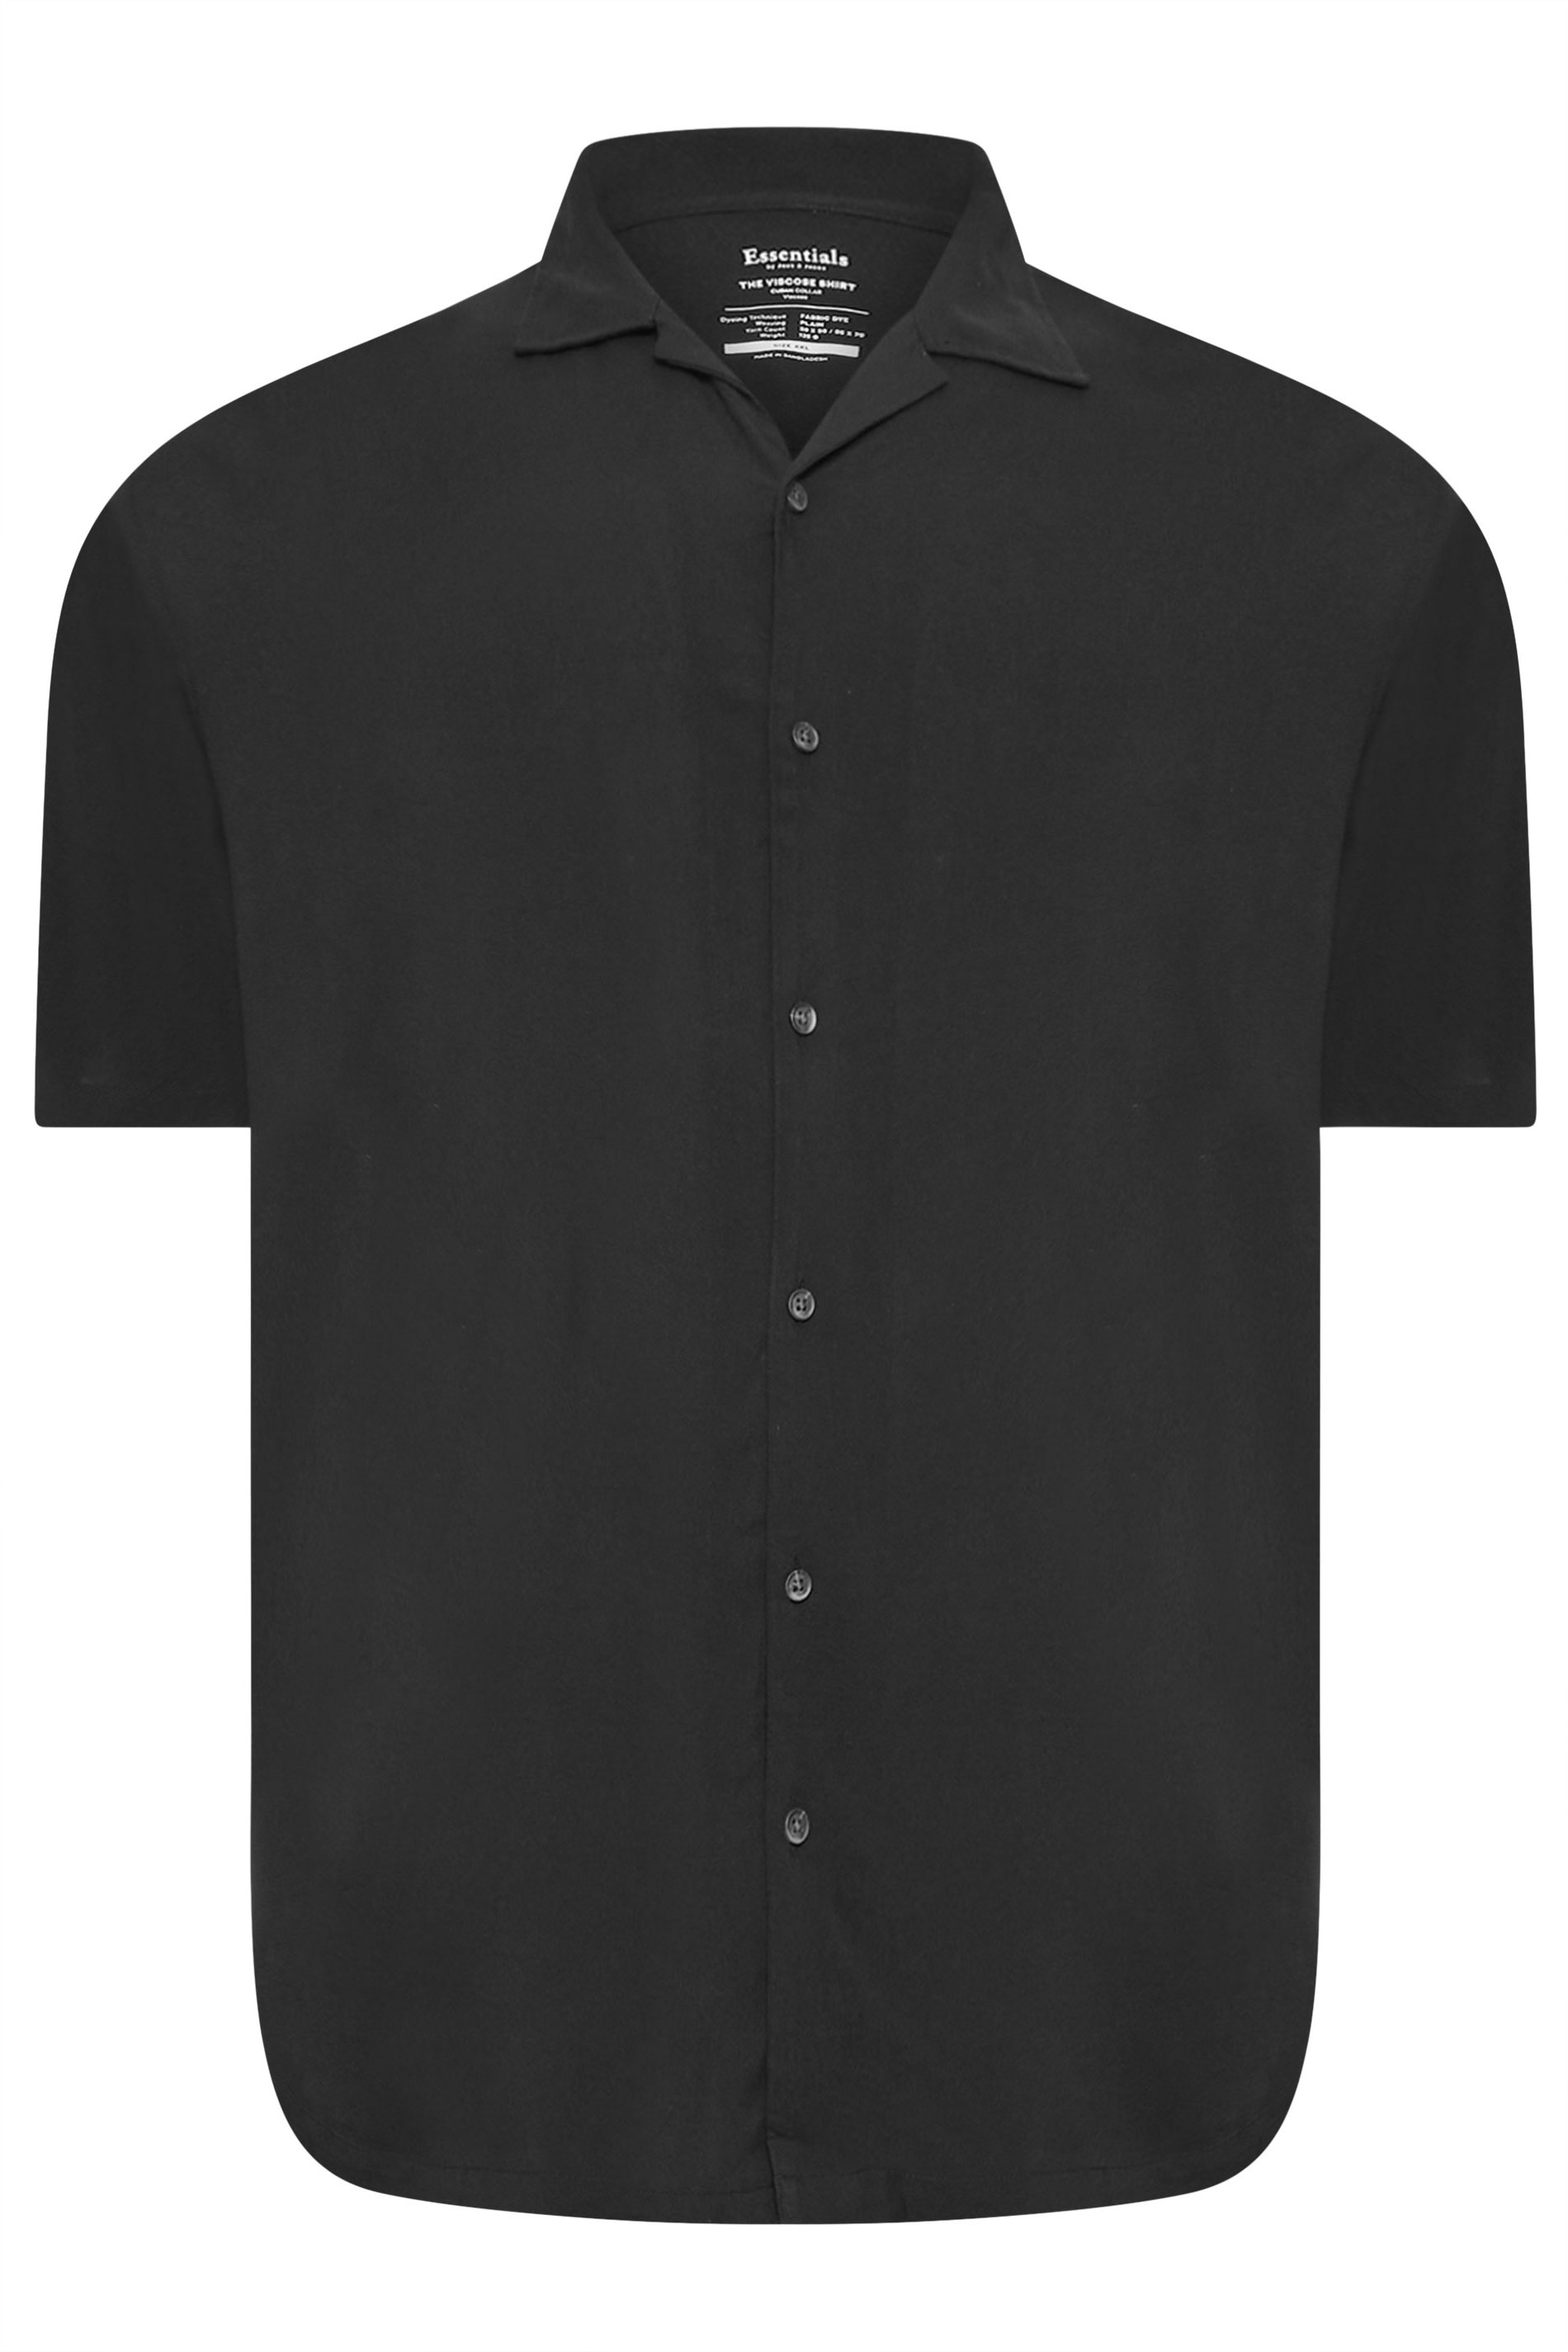 JACK & JONES Big & Tall Black Resort Short Sleeve Shirt | BadRhino 2